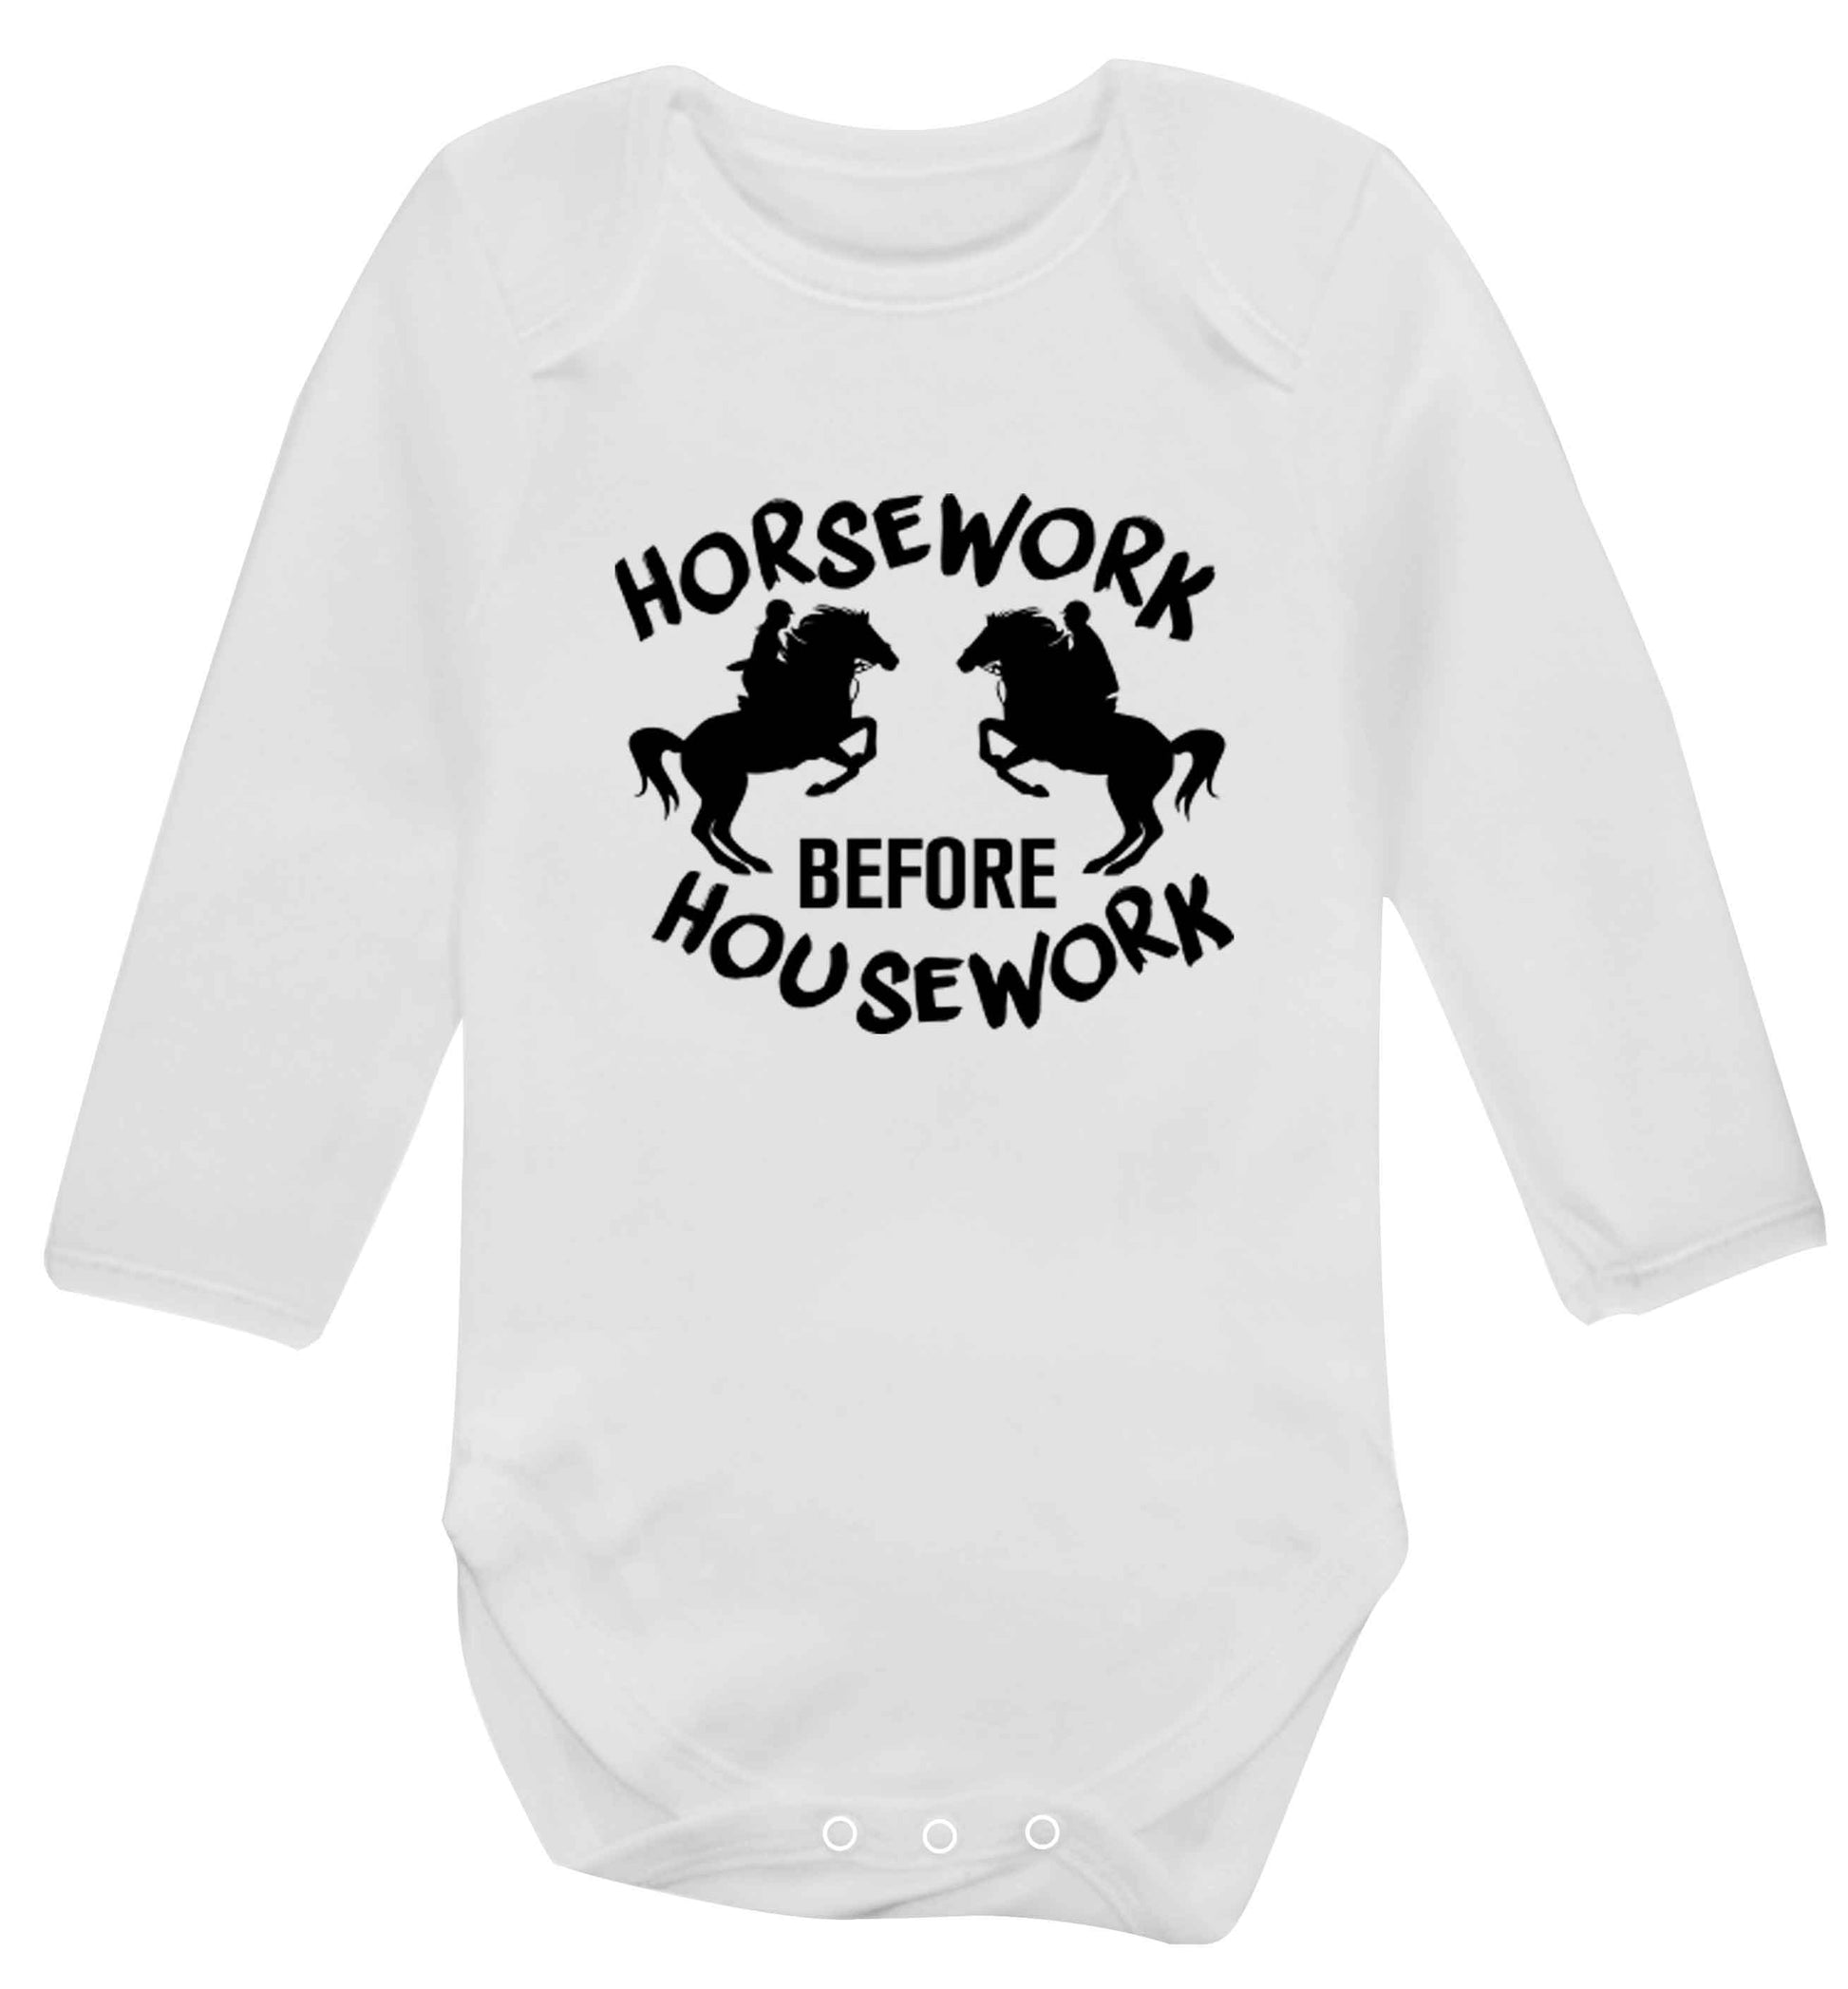 Horsework before housework baby vest long sleeved white 6-12 months